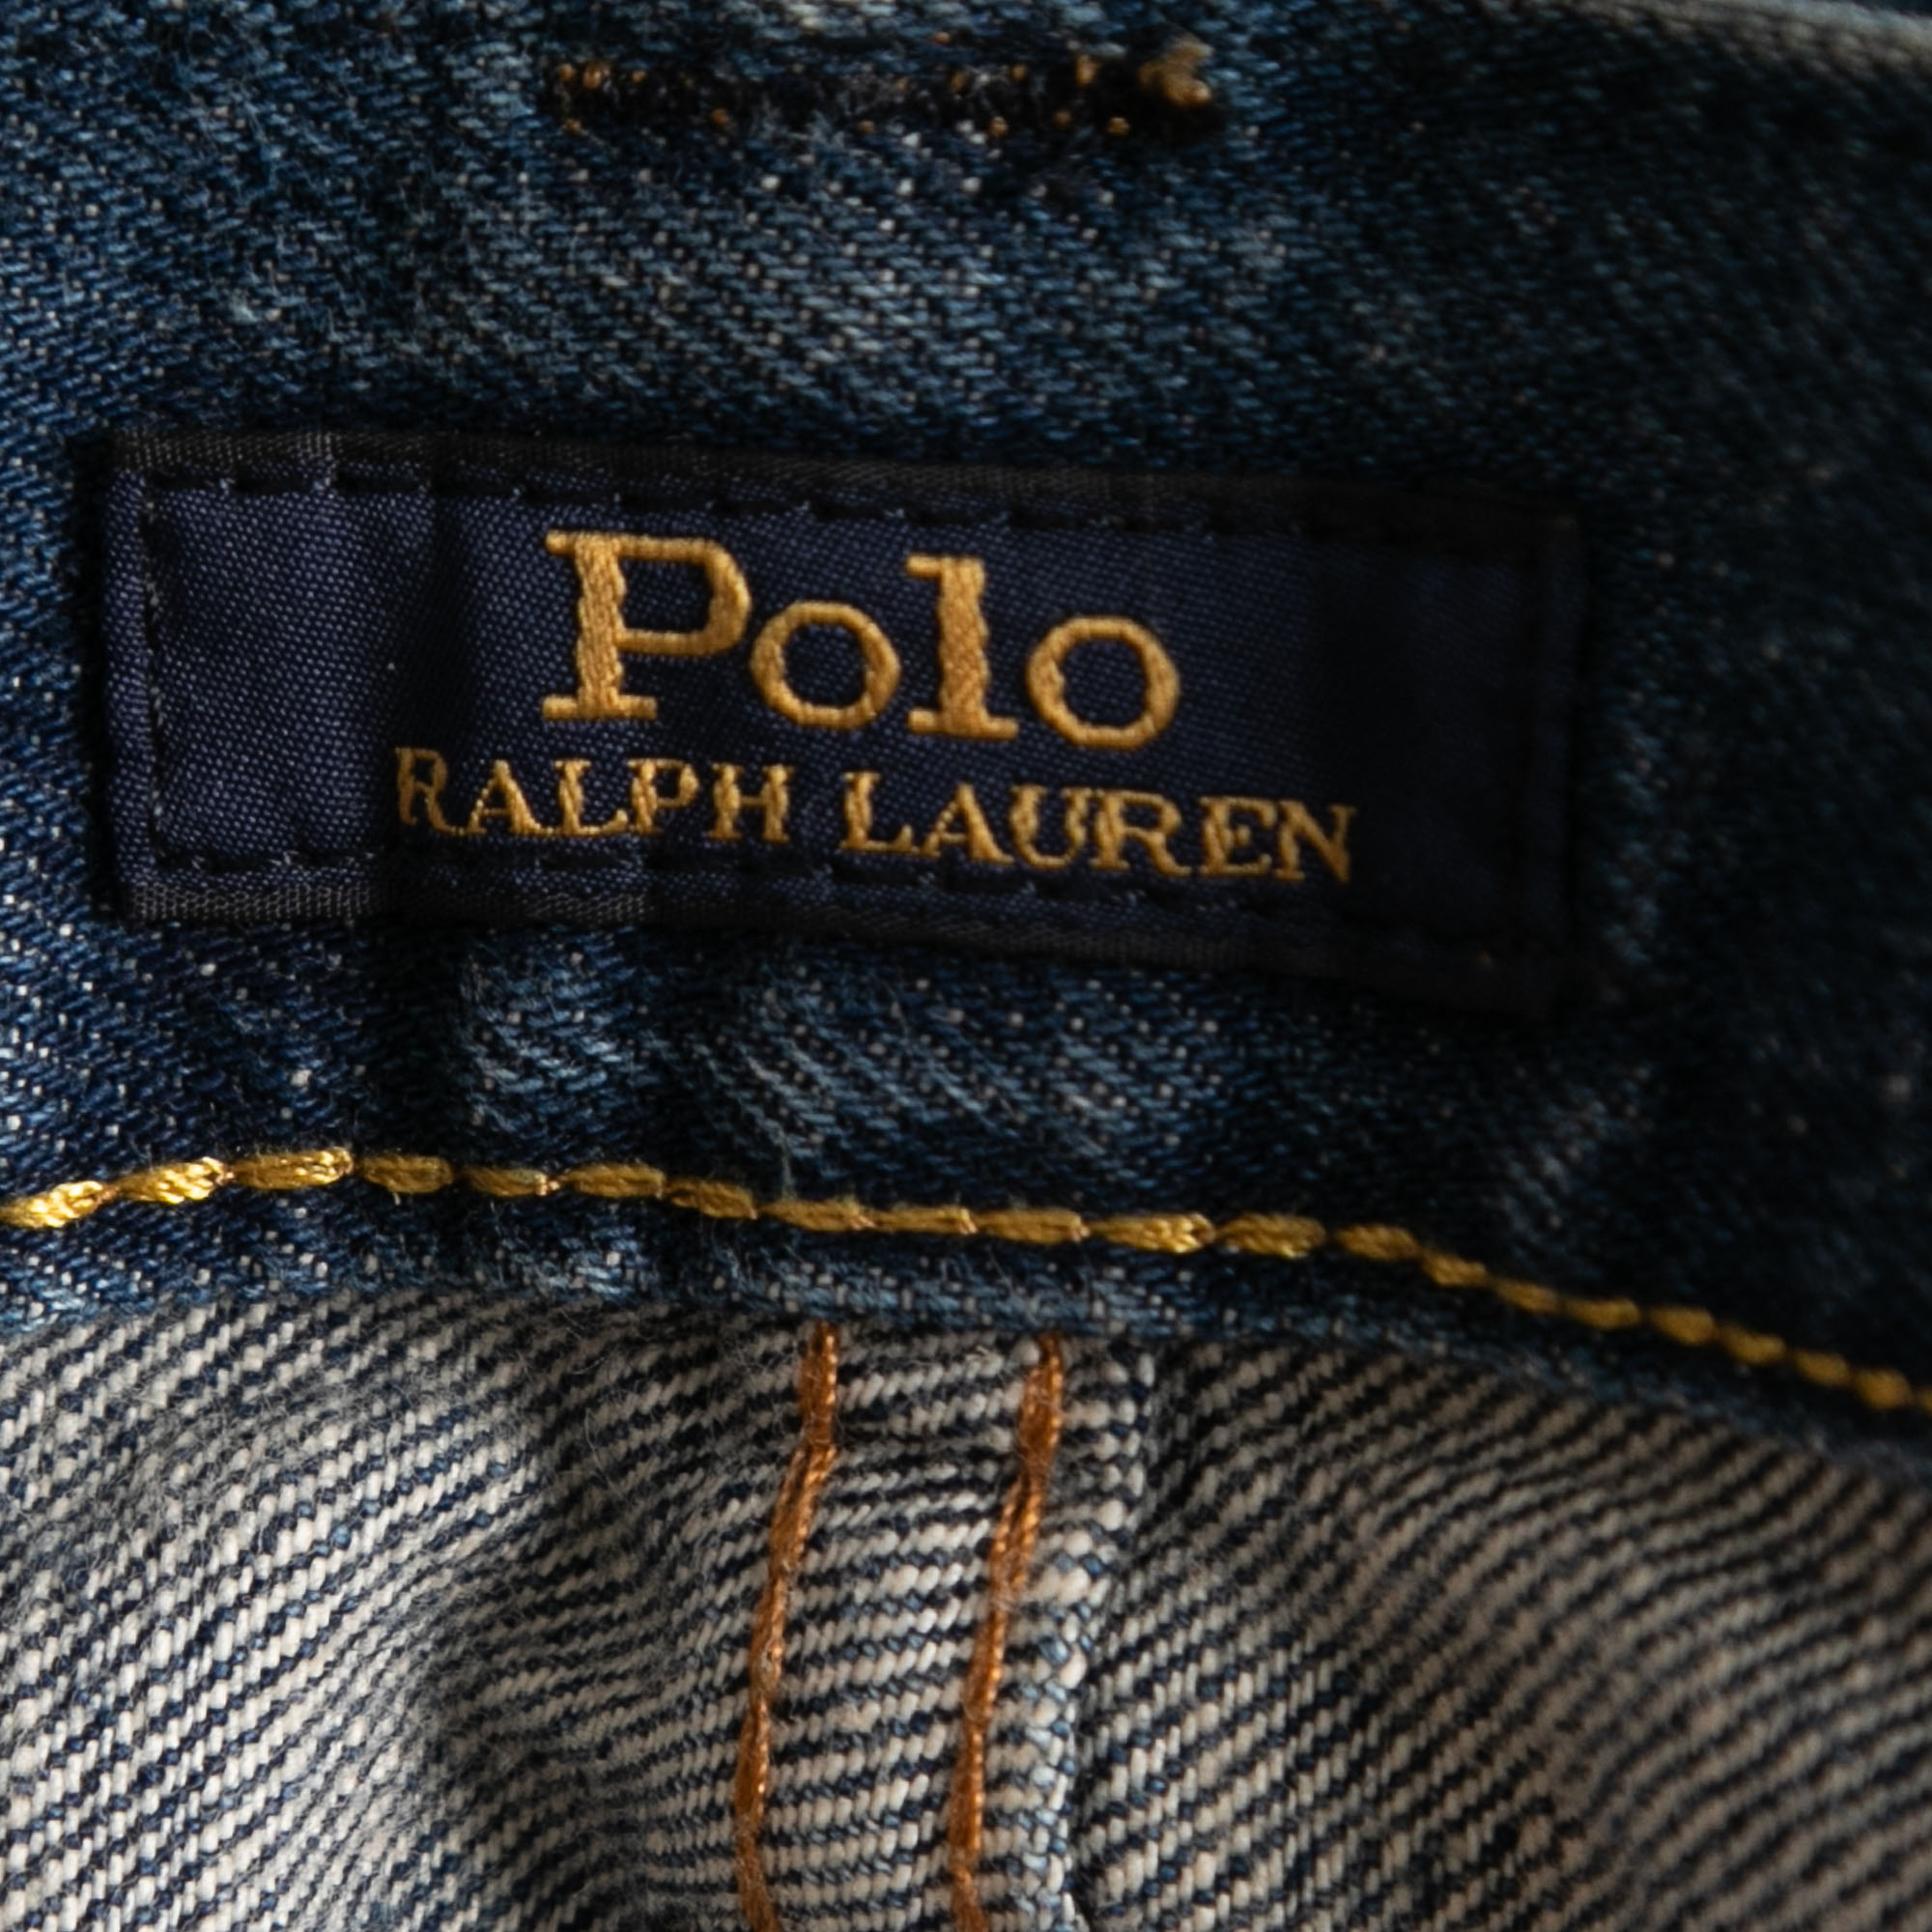 Polo Ralph Lauren Blue Distressed Denim The Sulivan Slim Jeans L Waist 34